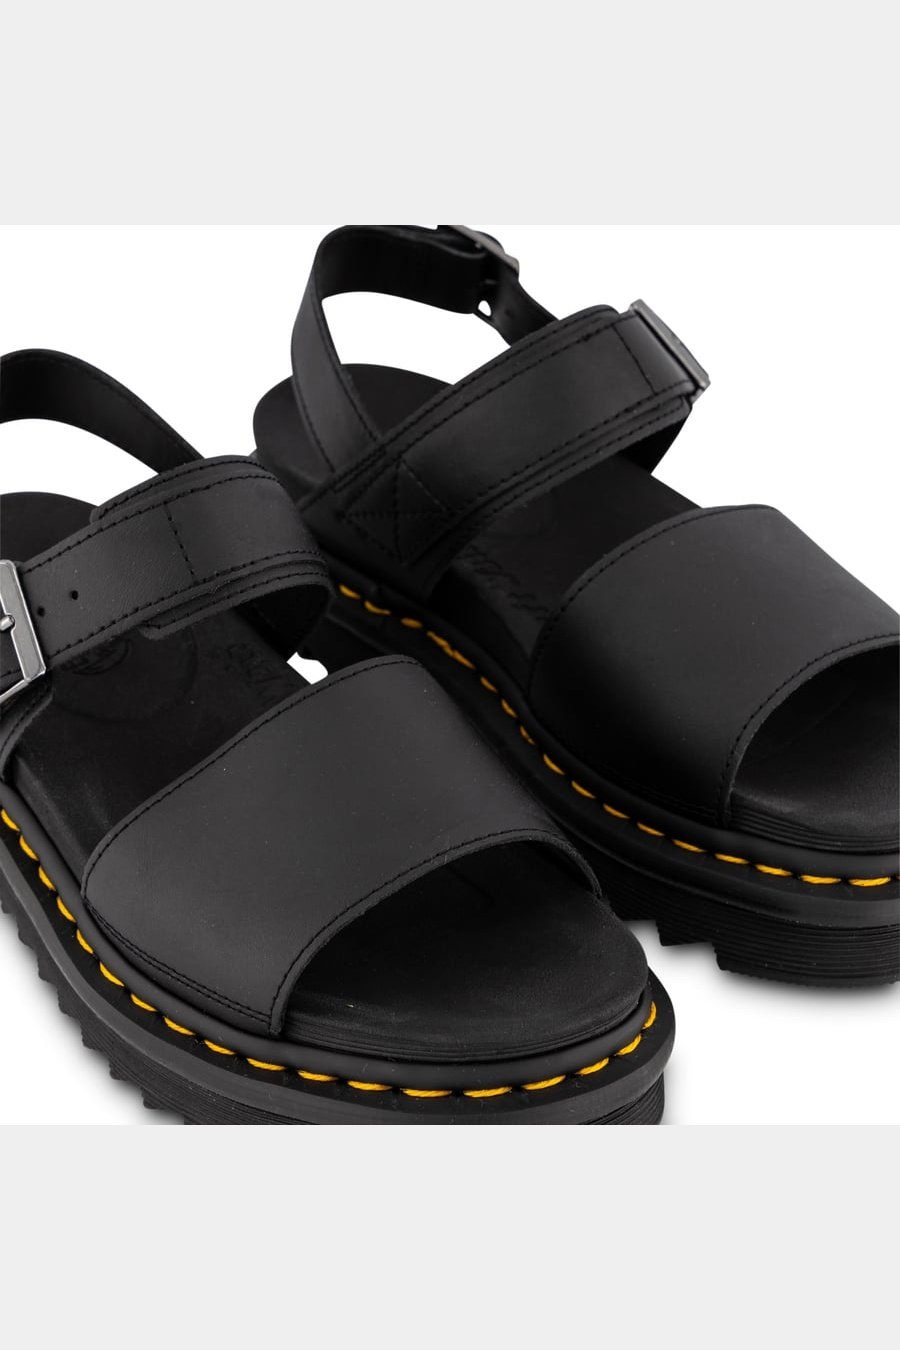 Dr martens voss single strap sandal - black hydro